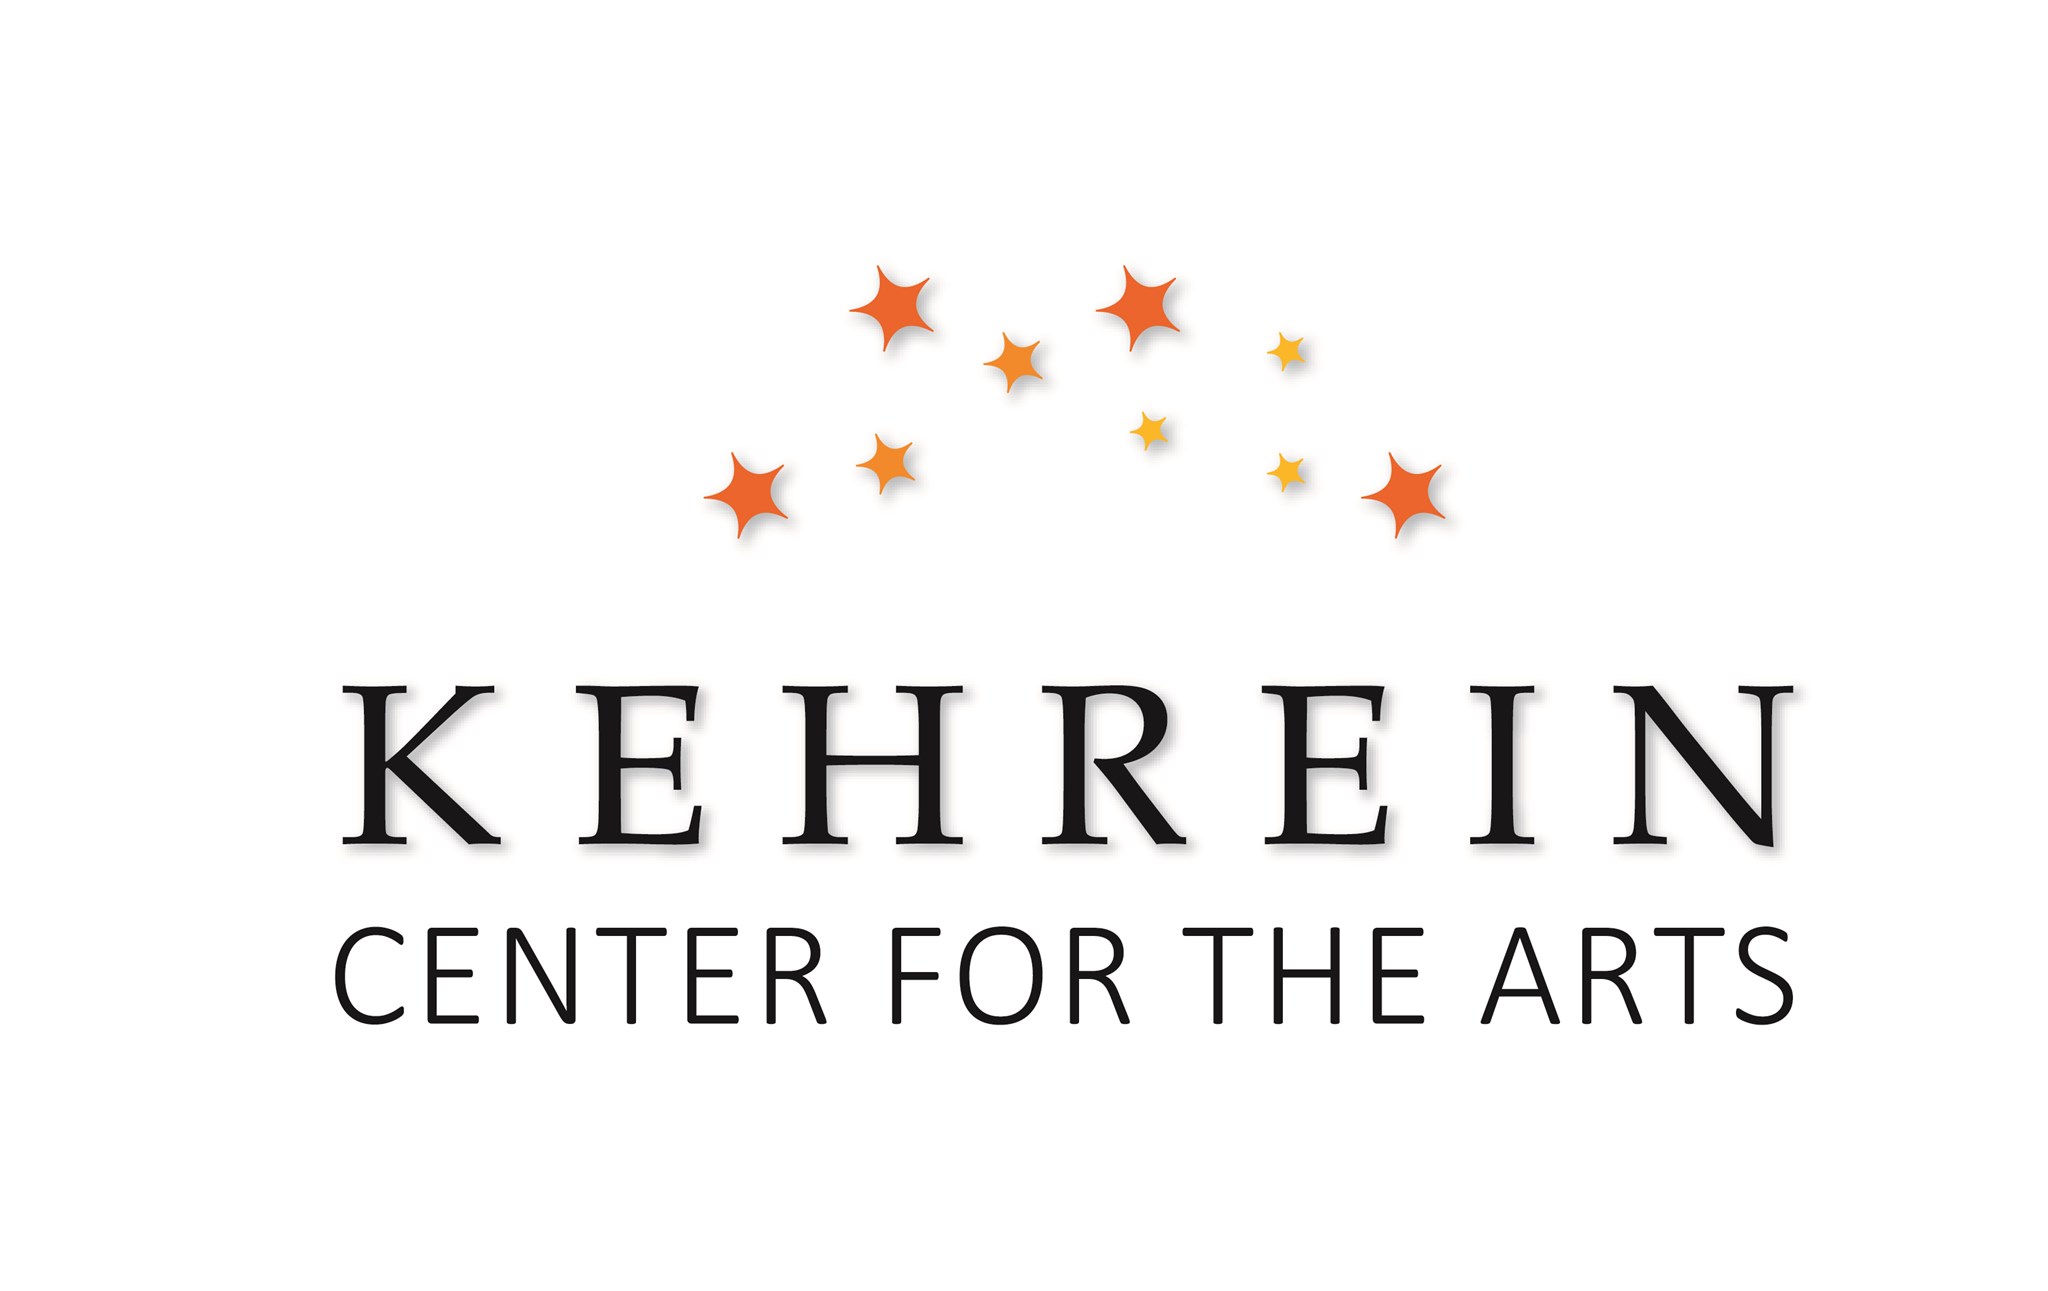 Kehrein Center for the Arts